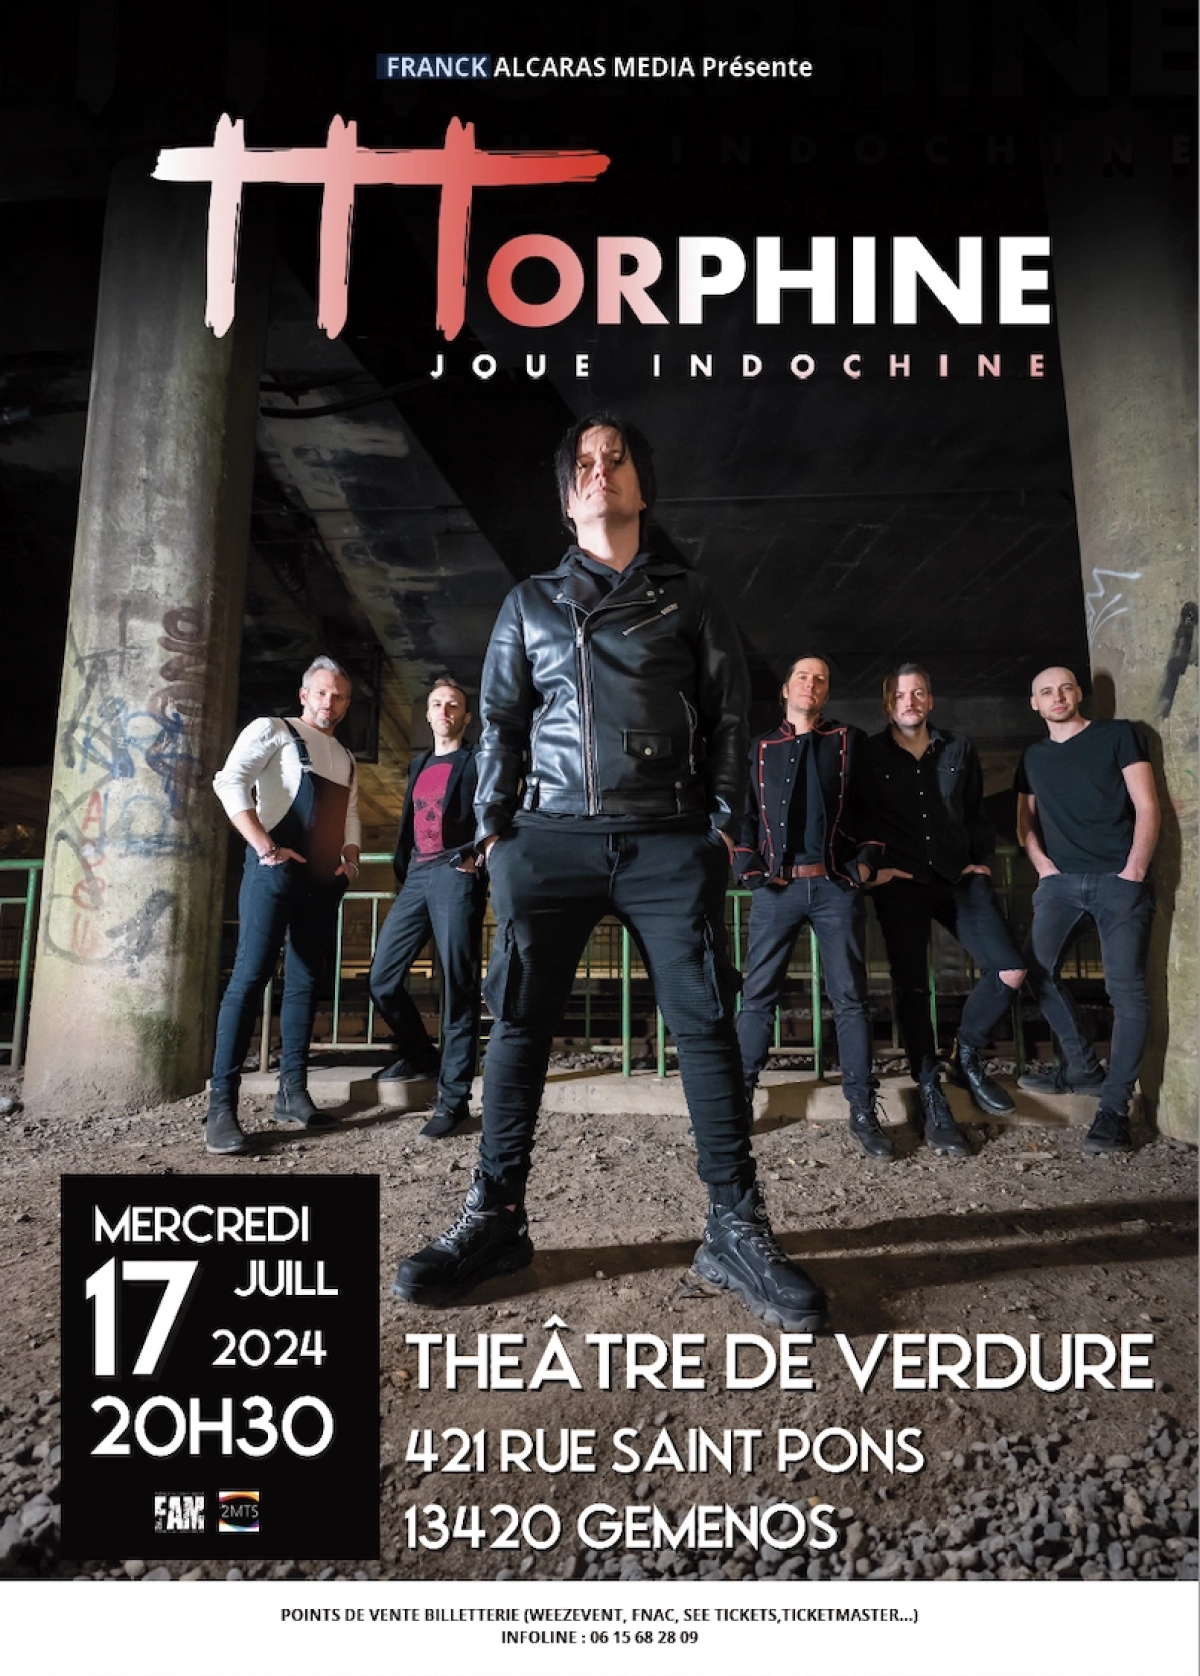 Morphine Joue Indochine in der Theatre De Verdure Gemenos Tickets